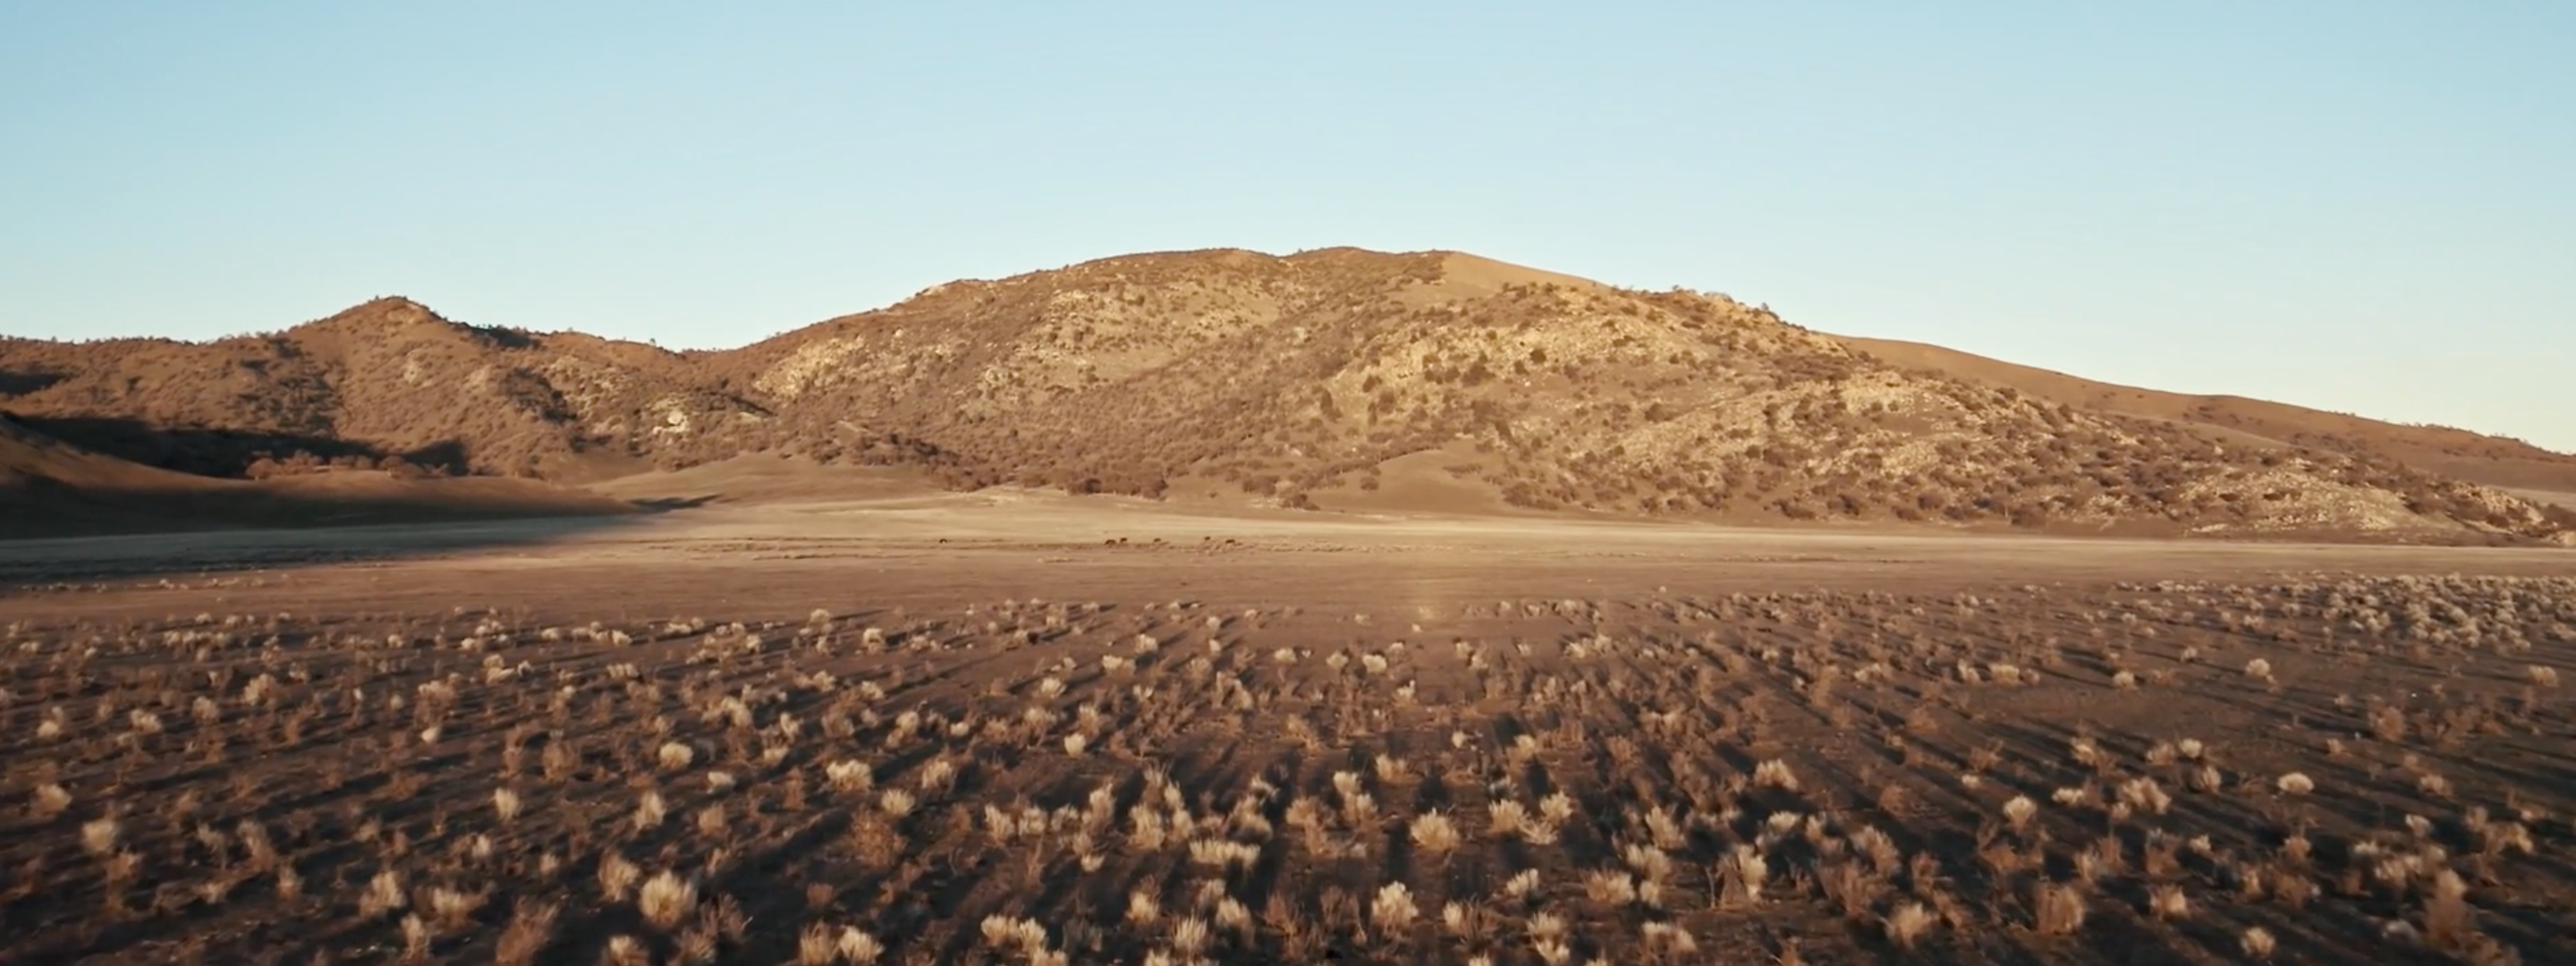 <a href="https://www.capgemini.com/news/inside-stories/mojave-desert/"><a href="https://www.capgemini.com/news/inside-stories/mojave-desert/">The Mojave Desert: Data for tortoises and tires</a></a>